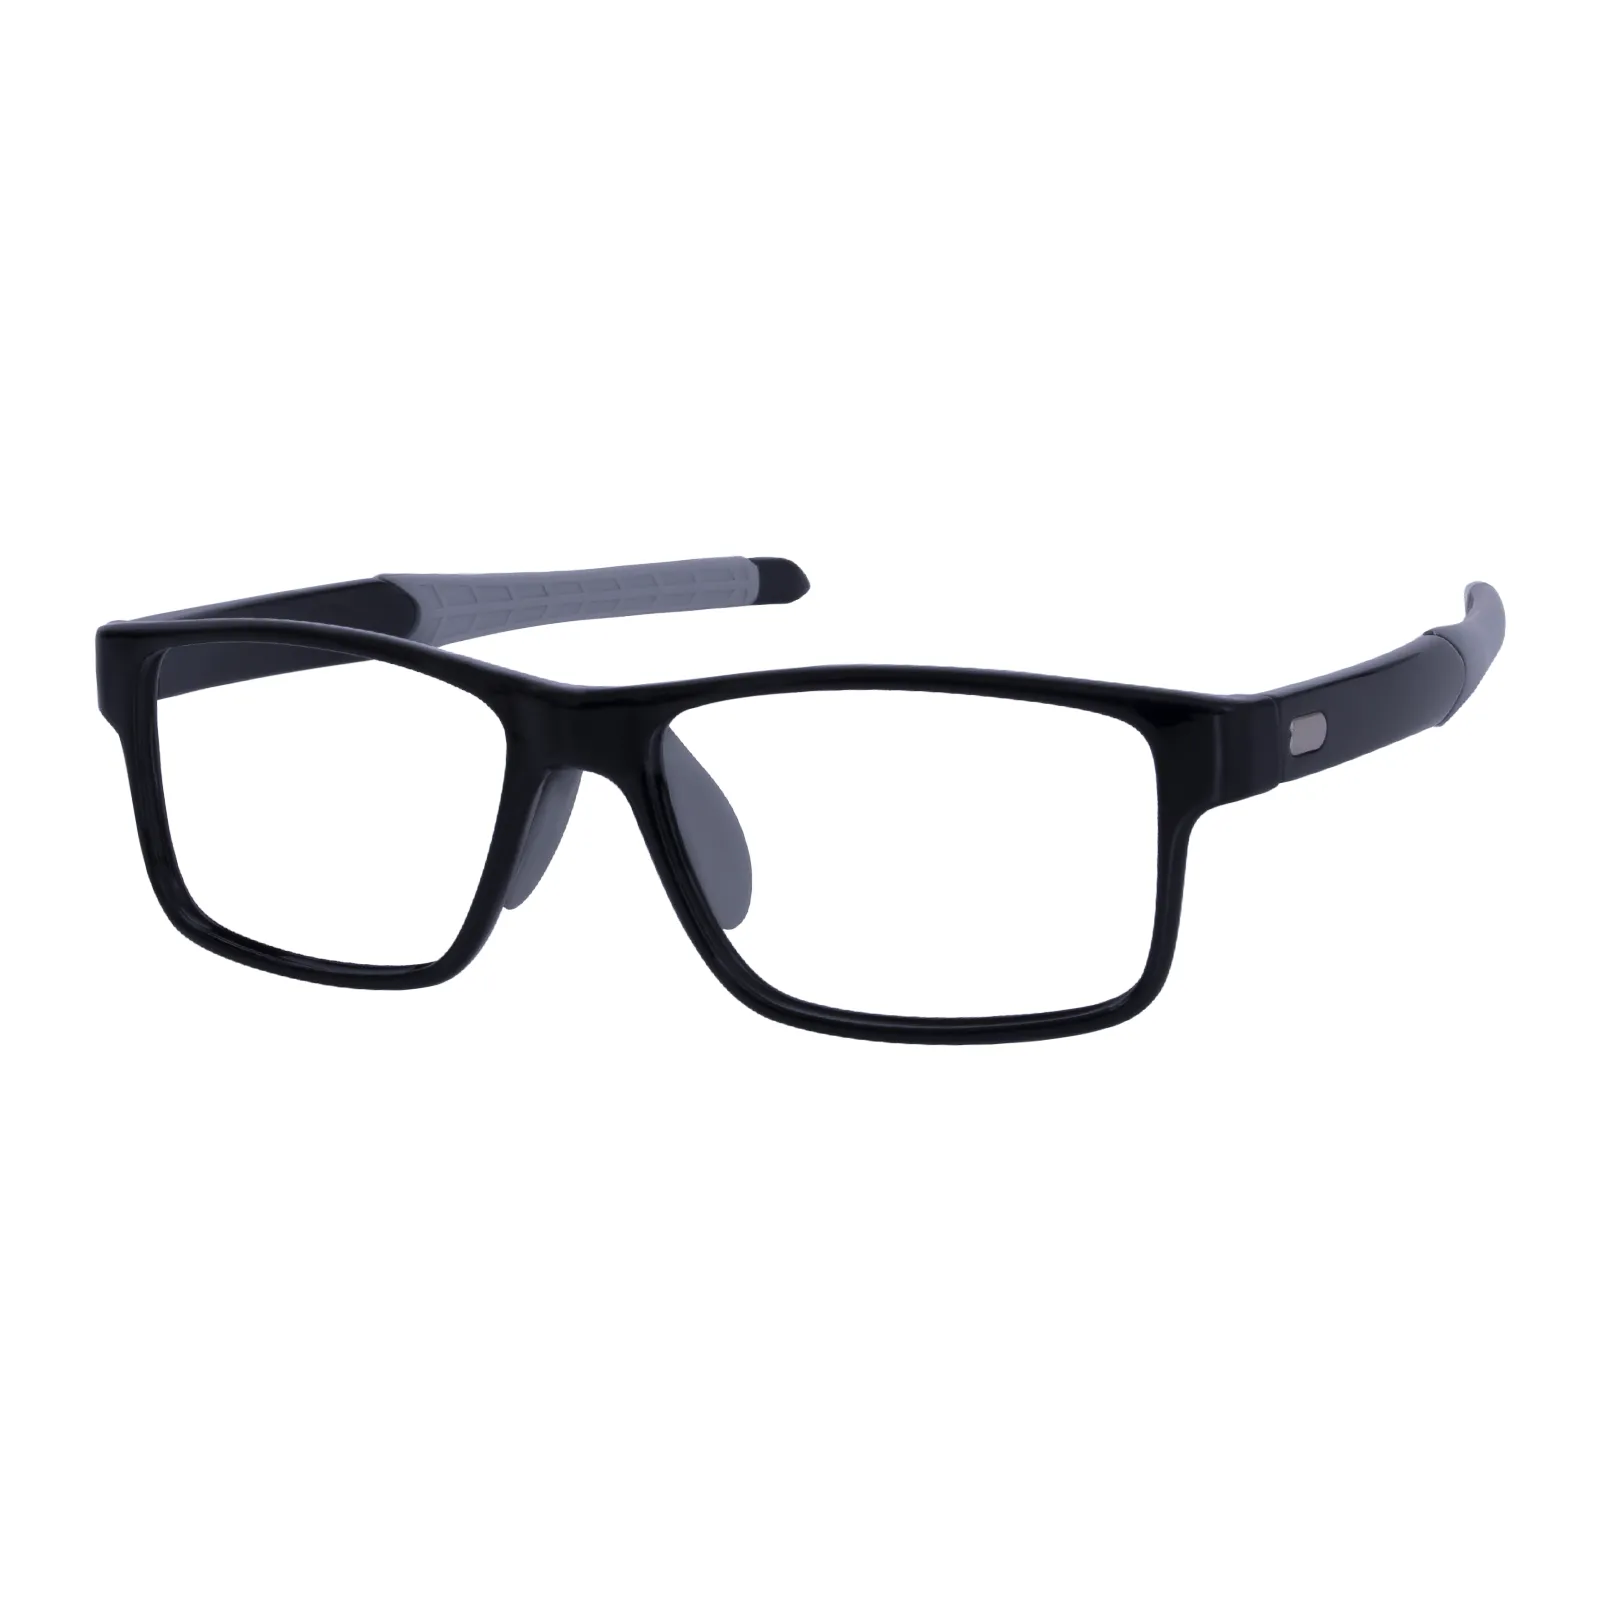 Anthony - Rectangle Black/Grey Glasses for Men